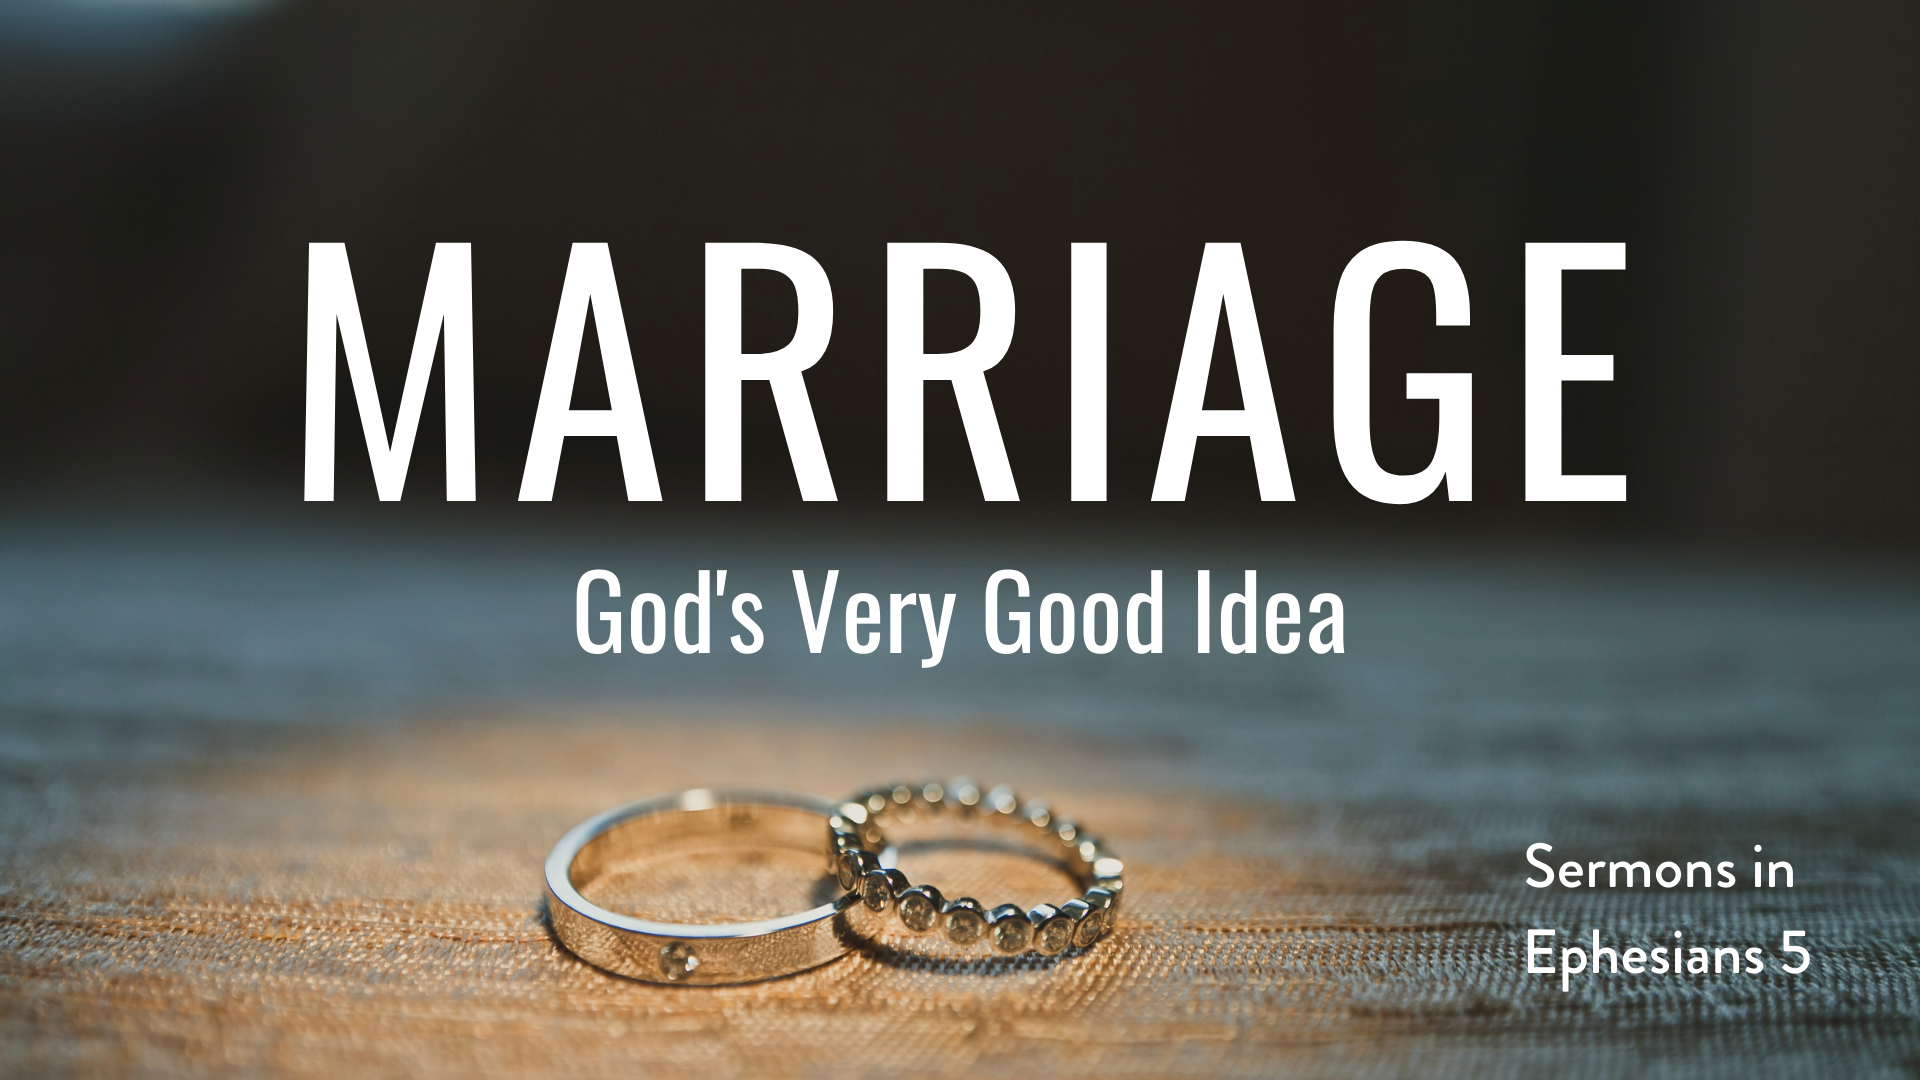 Biblical Marriage: Permanence